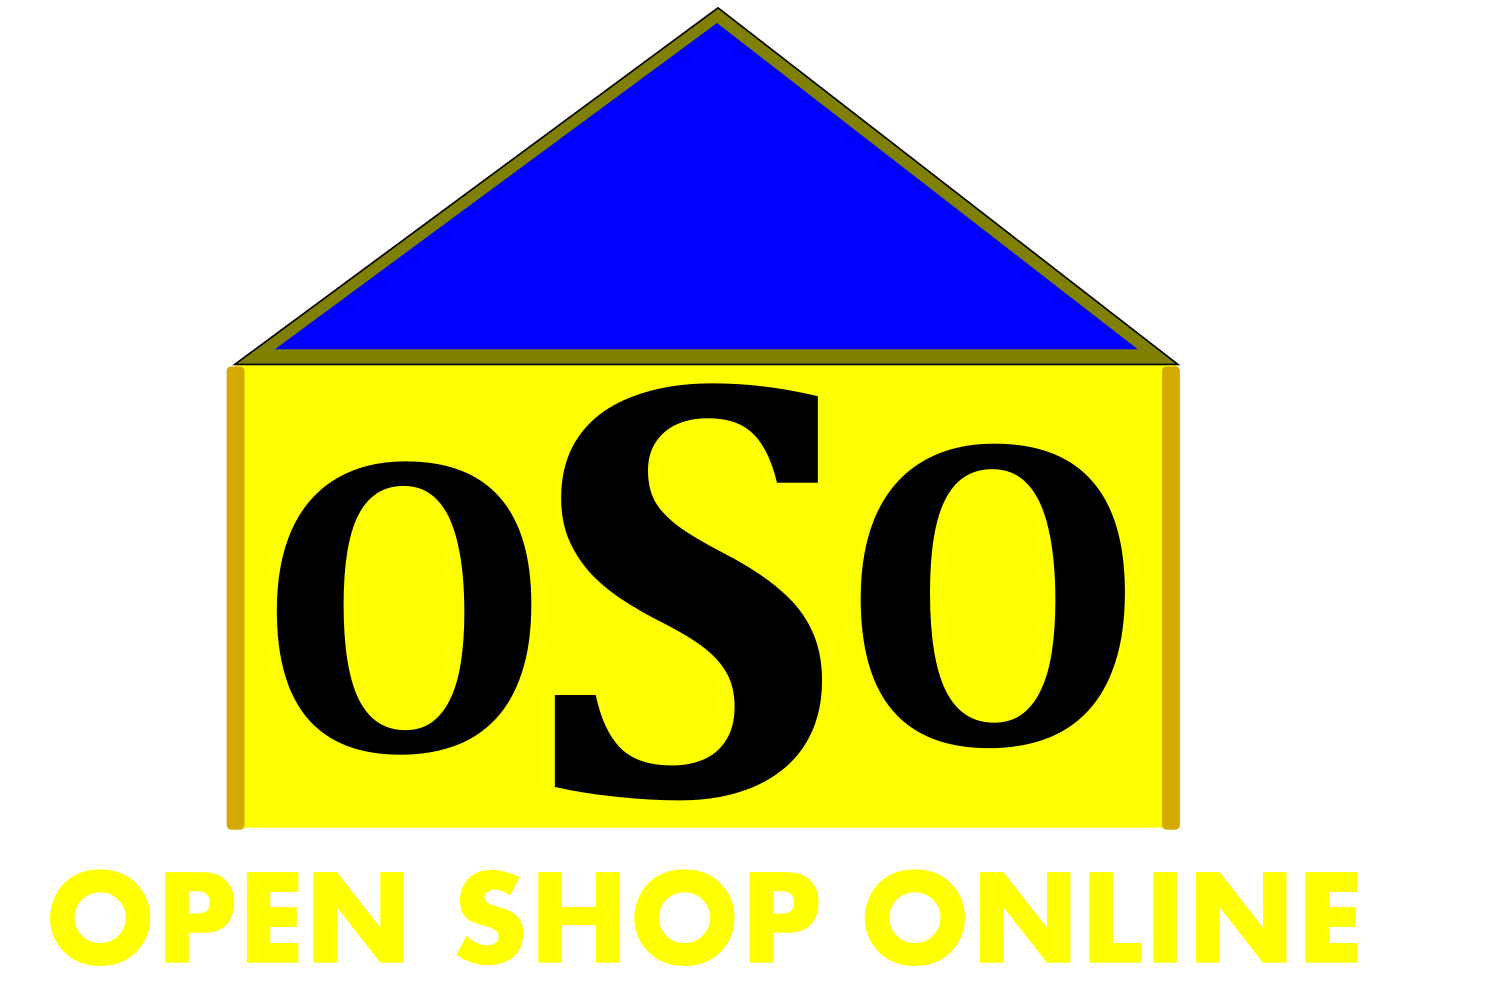 Open Shop Online